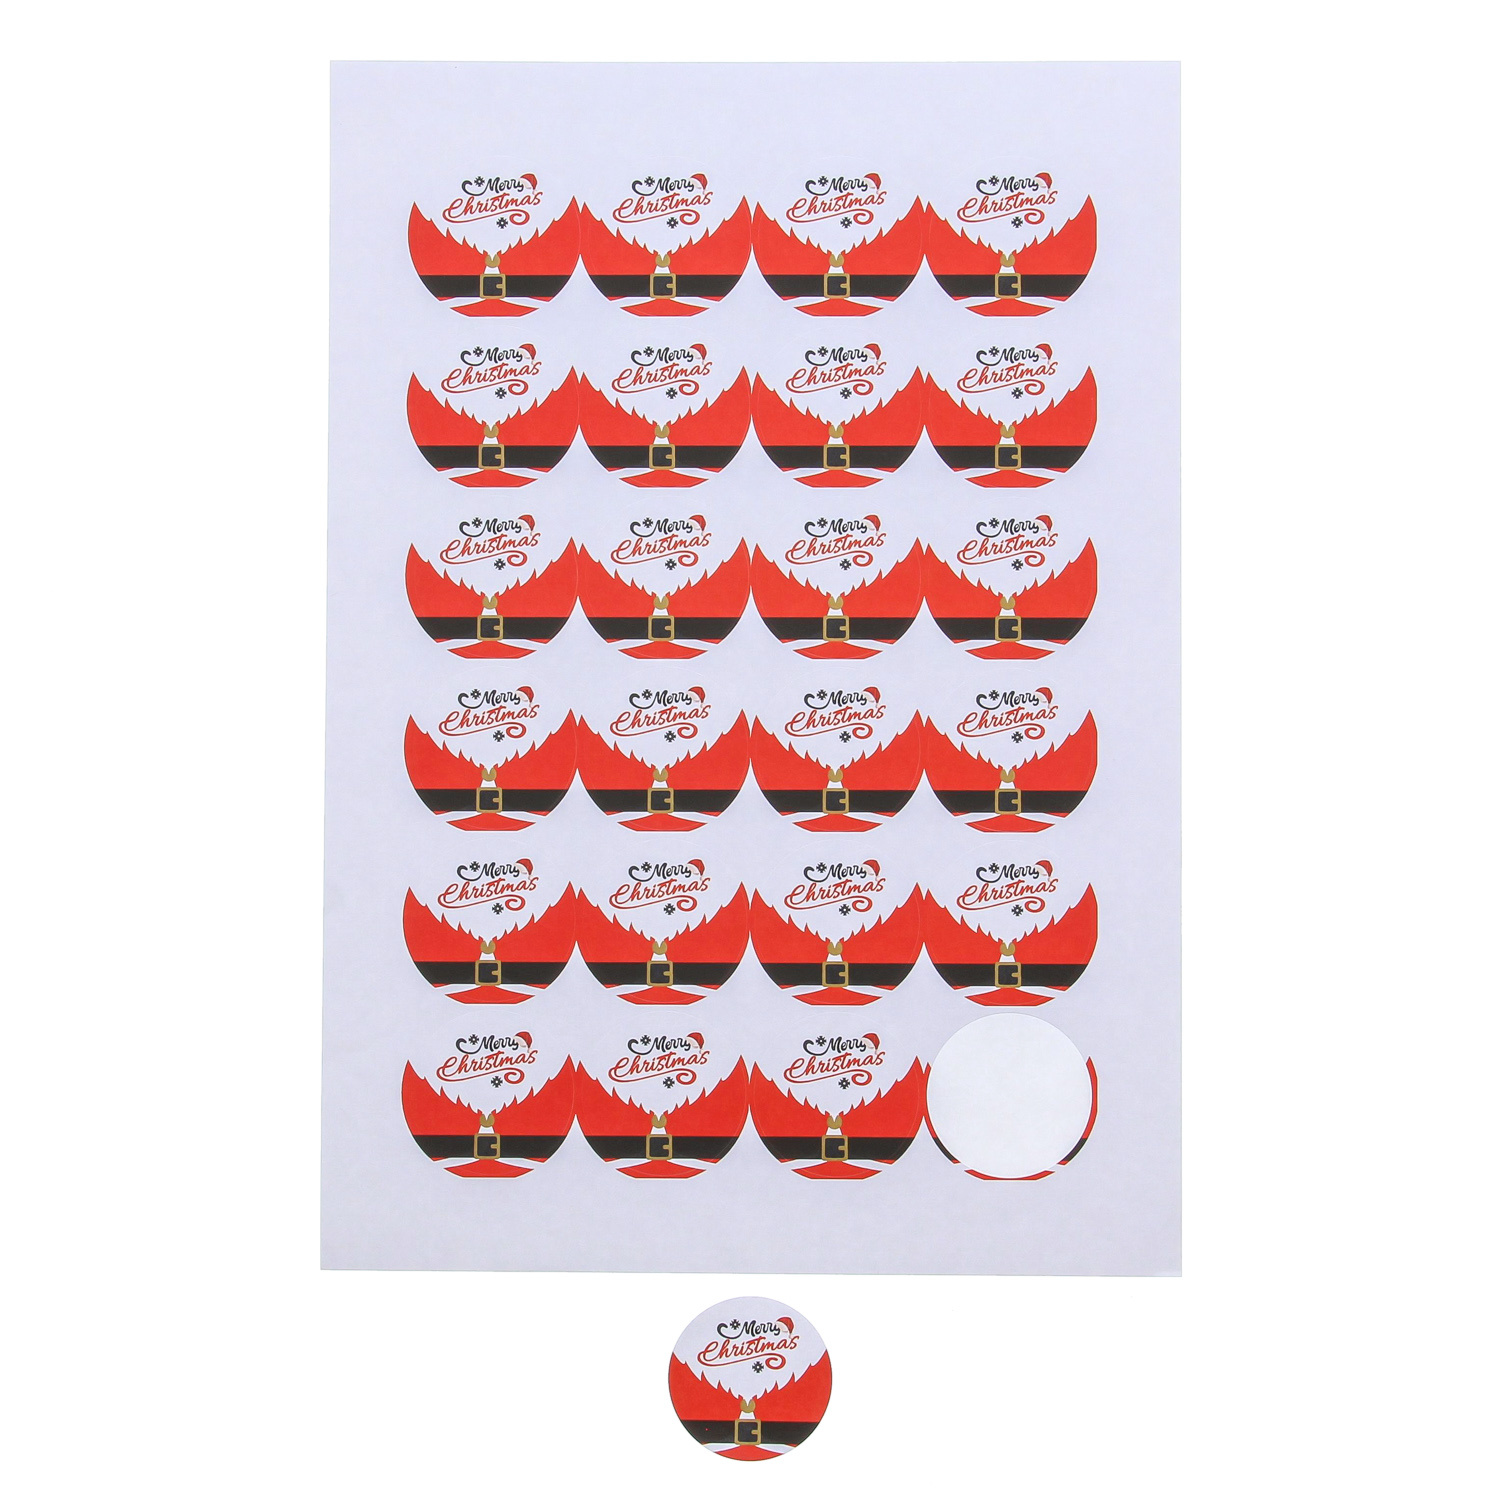 Sticker 4 cm "Santa Belly" Merry Christmas - 120 pieces